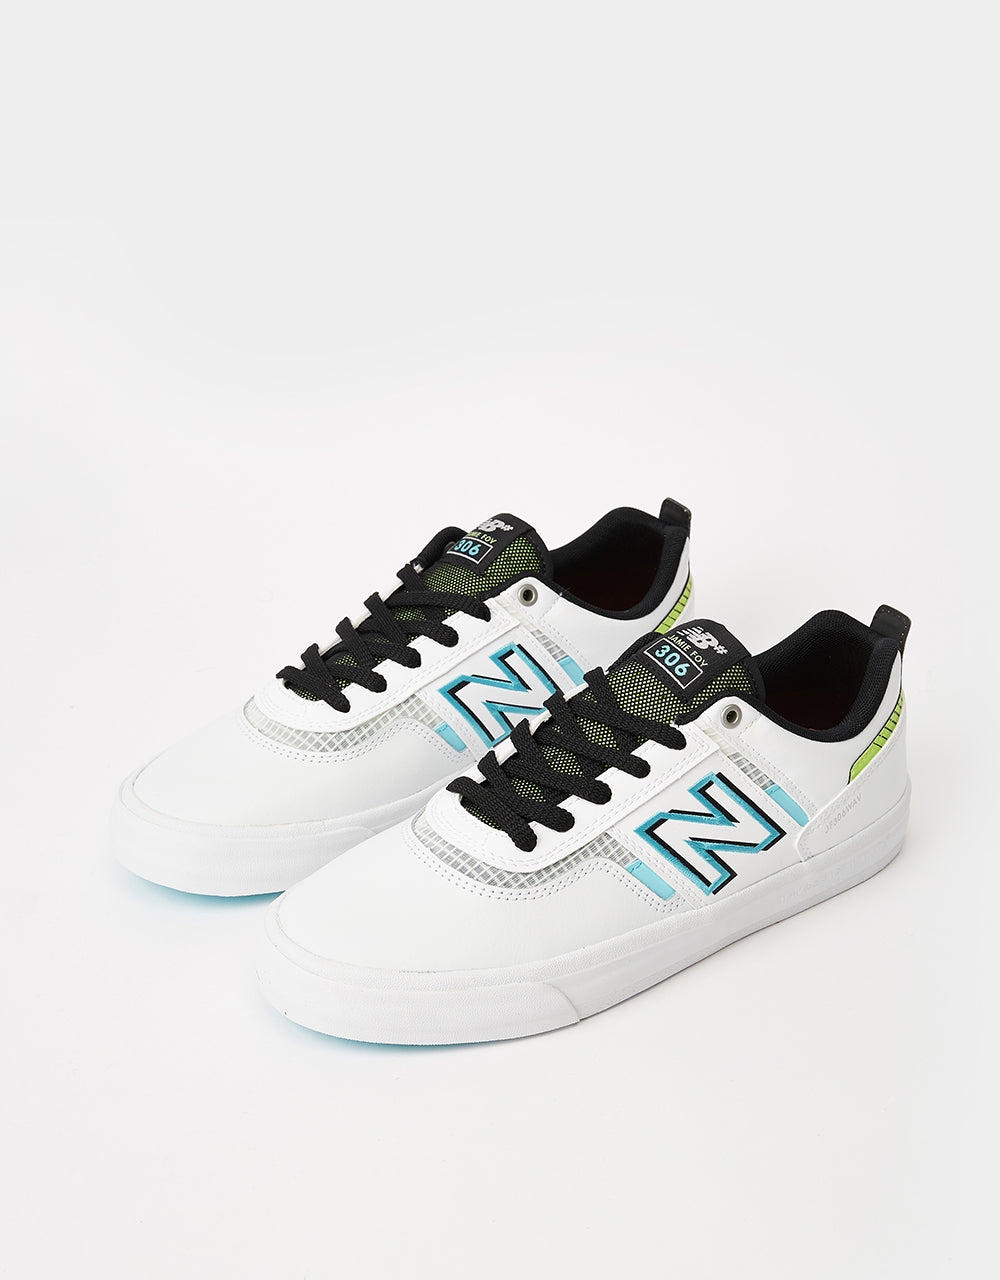 New Balance Numeric 306 Skate Shoes - White/Baby Blue